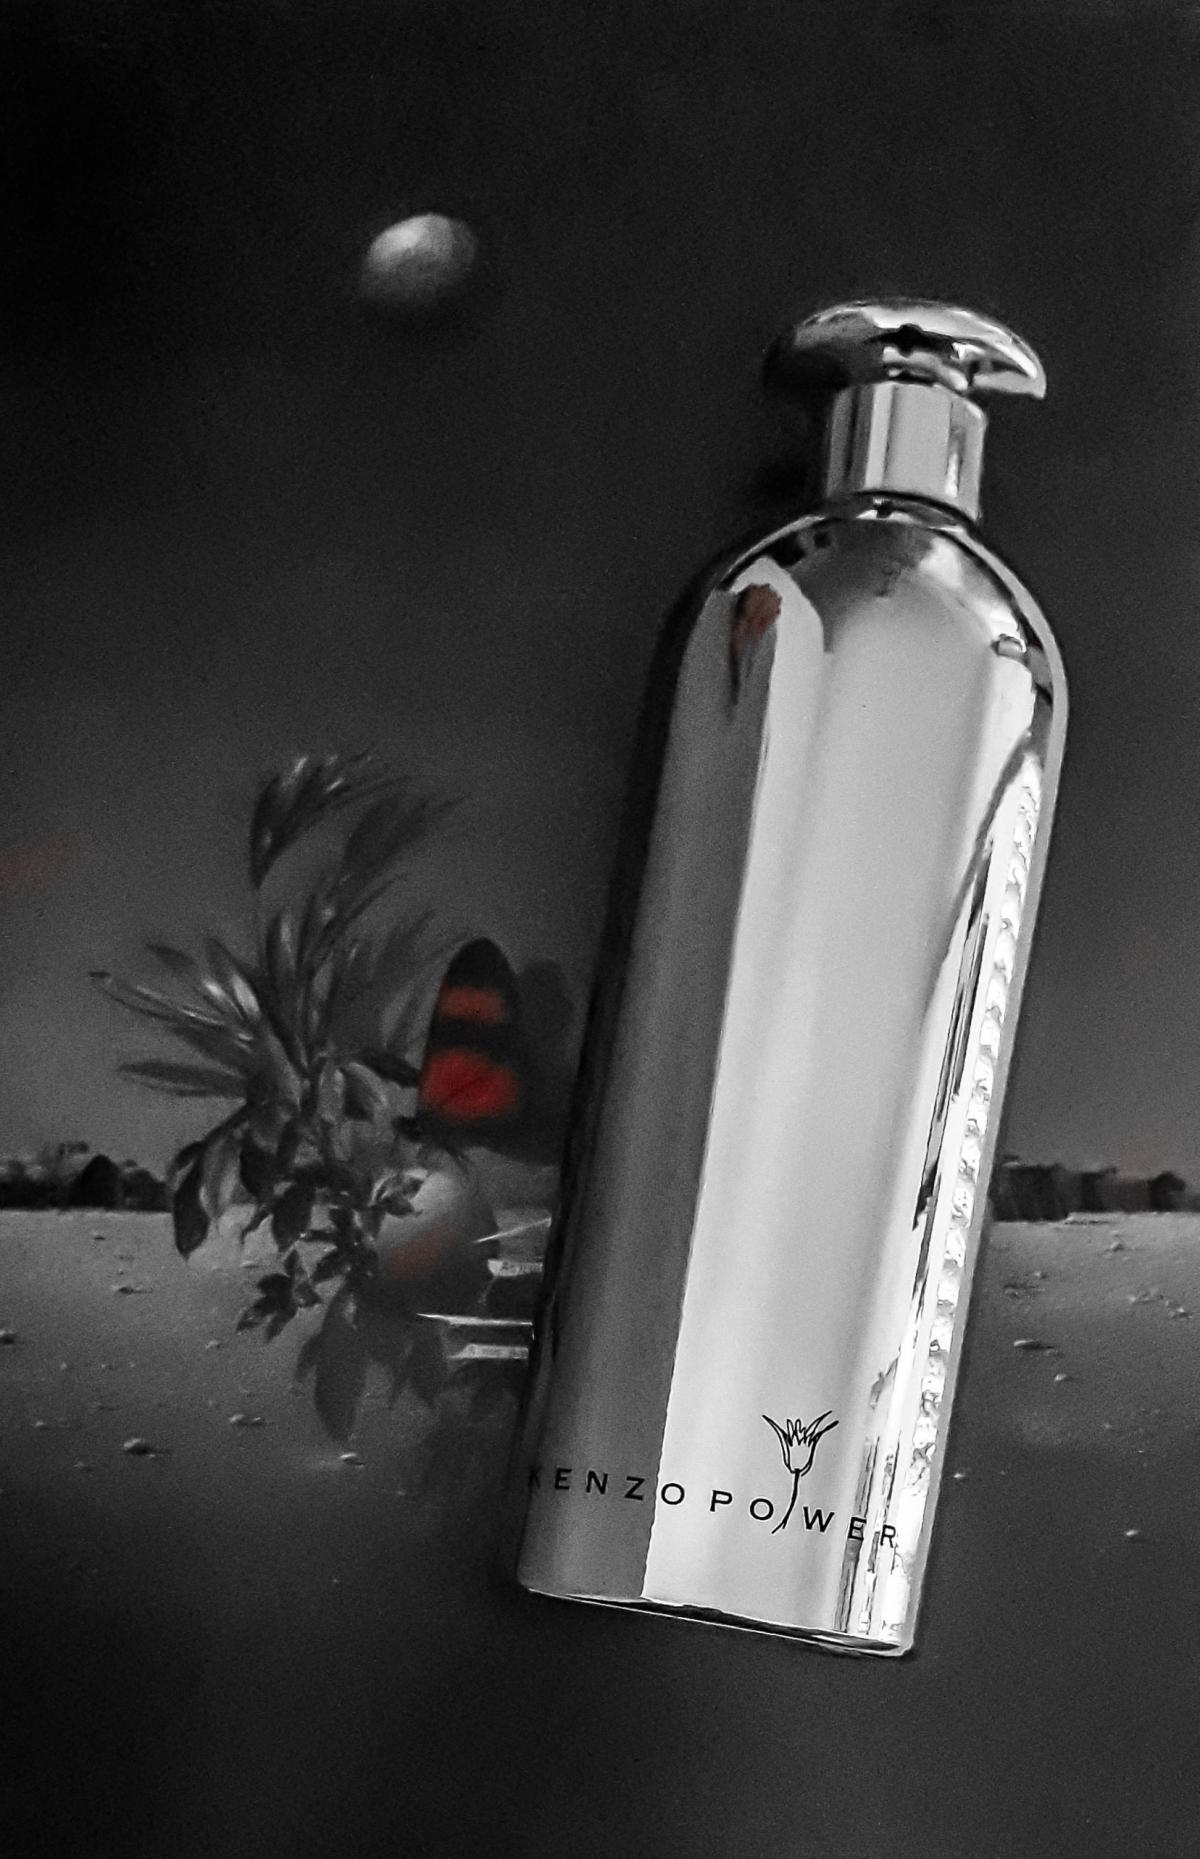 Power Kenzo cologne - a fragrance for men 2008